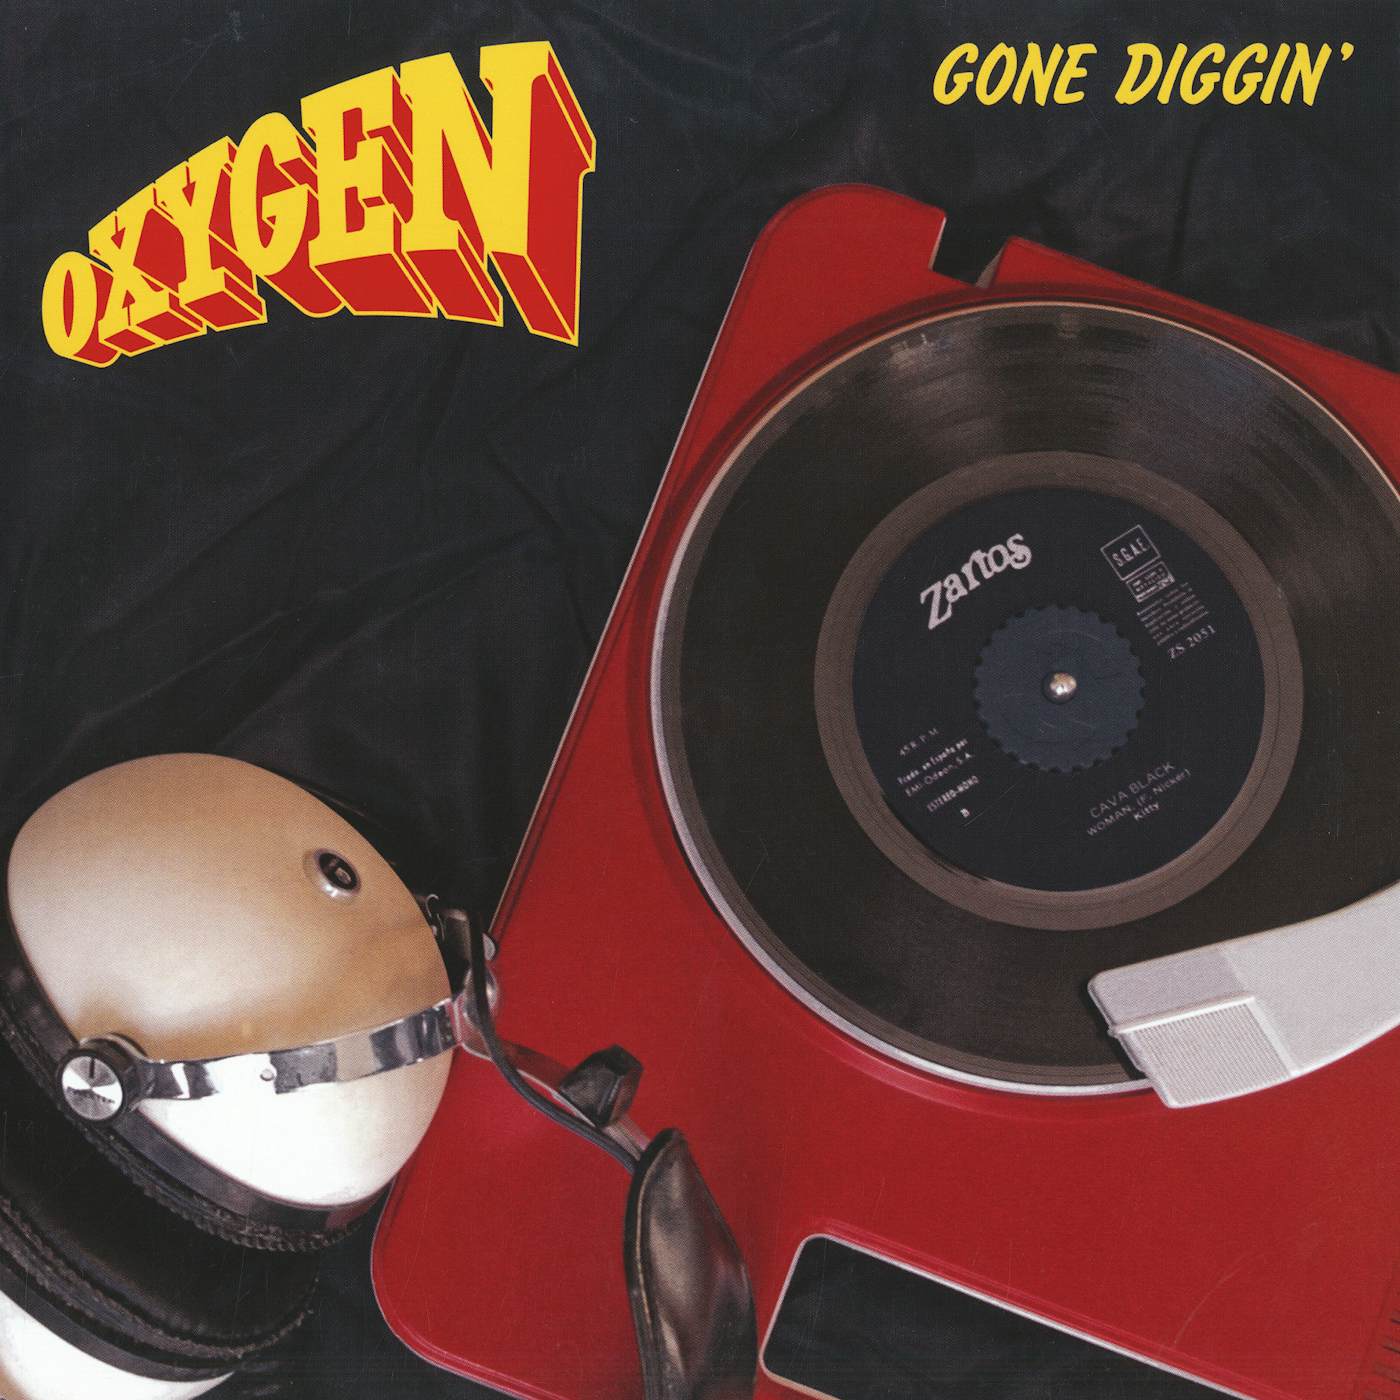 Oxygen GONE DIGGIN Vinyl Record